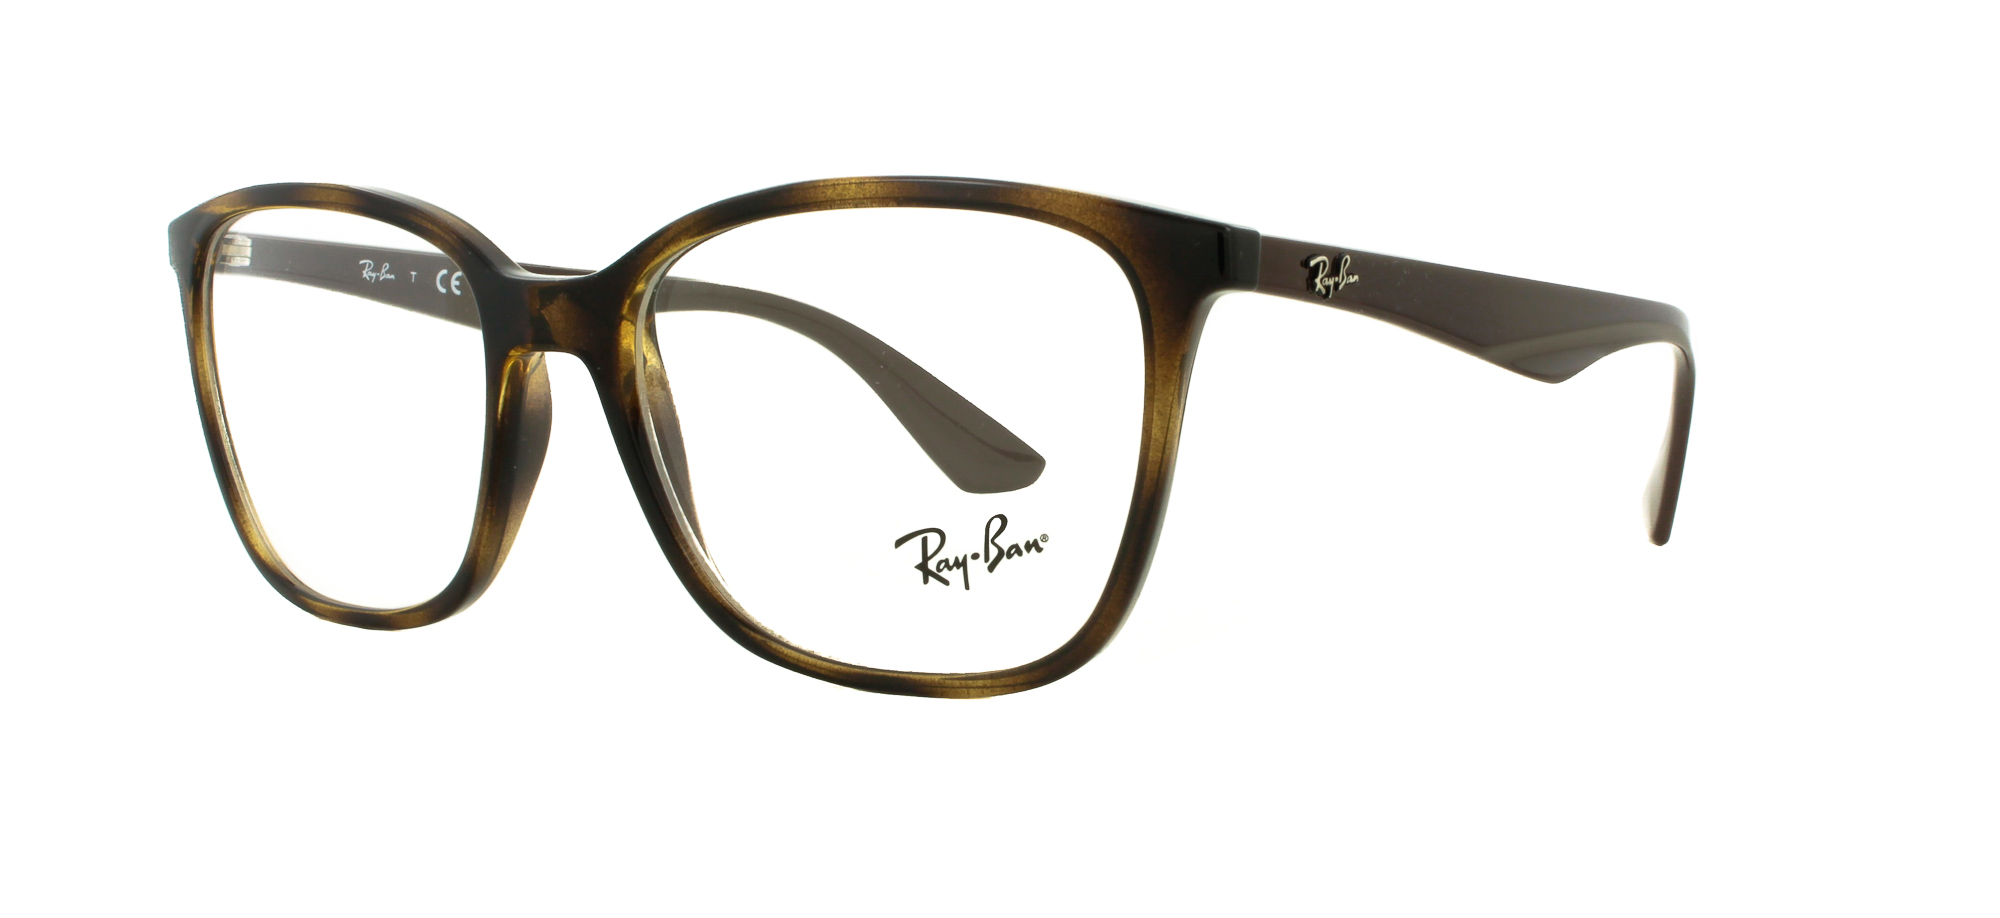 Ray Ban 7066 Eyeglasses